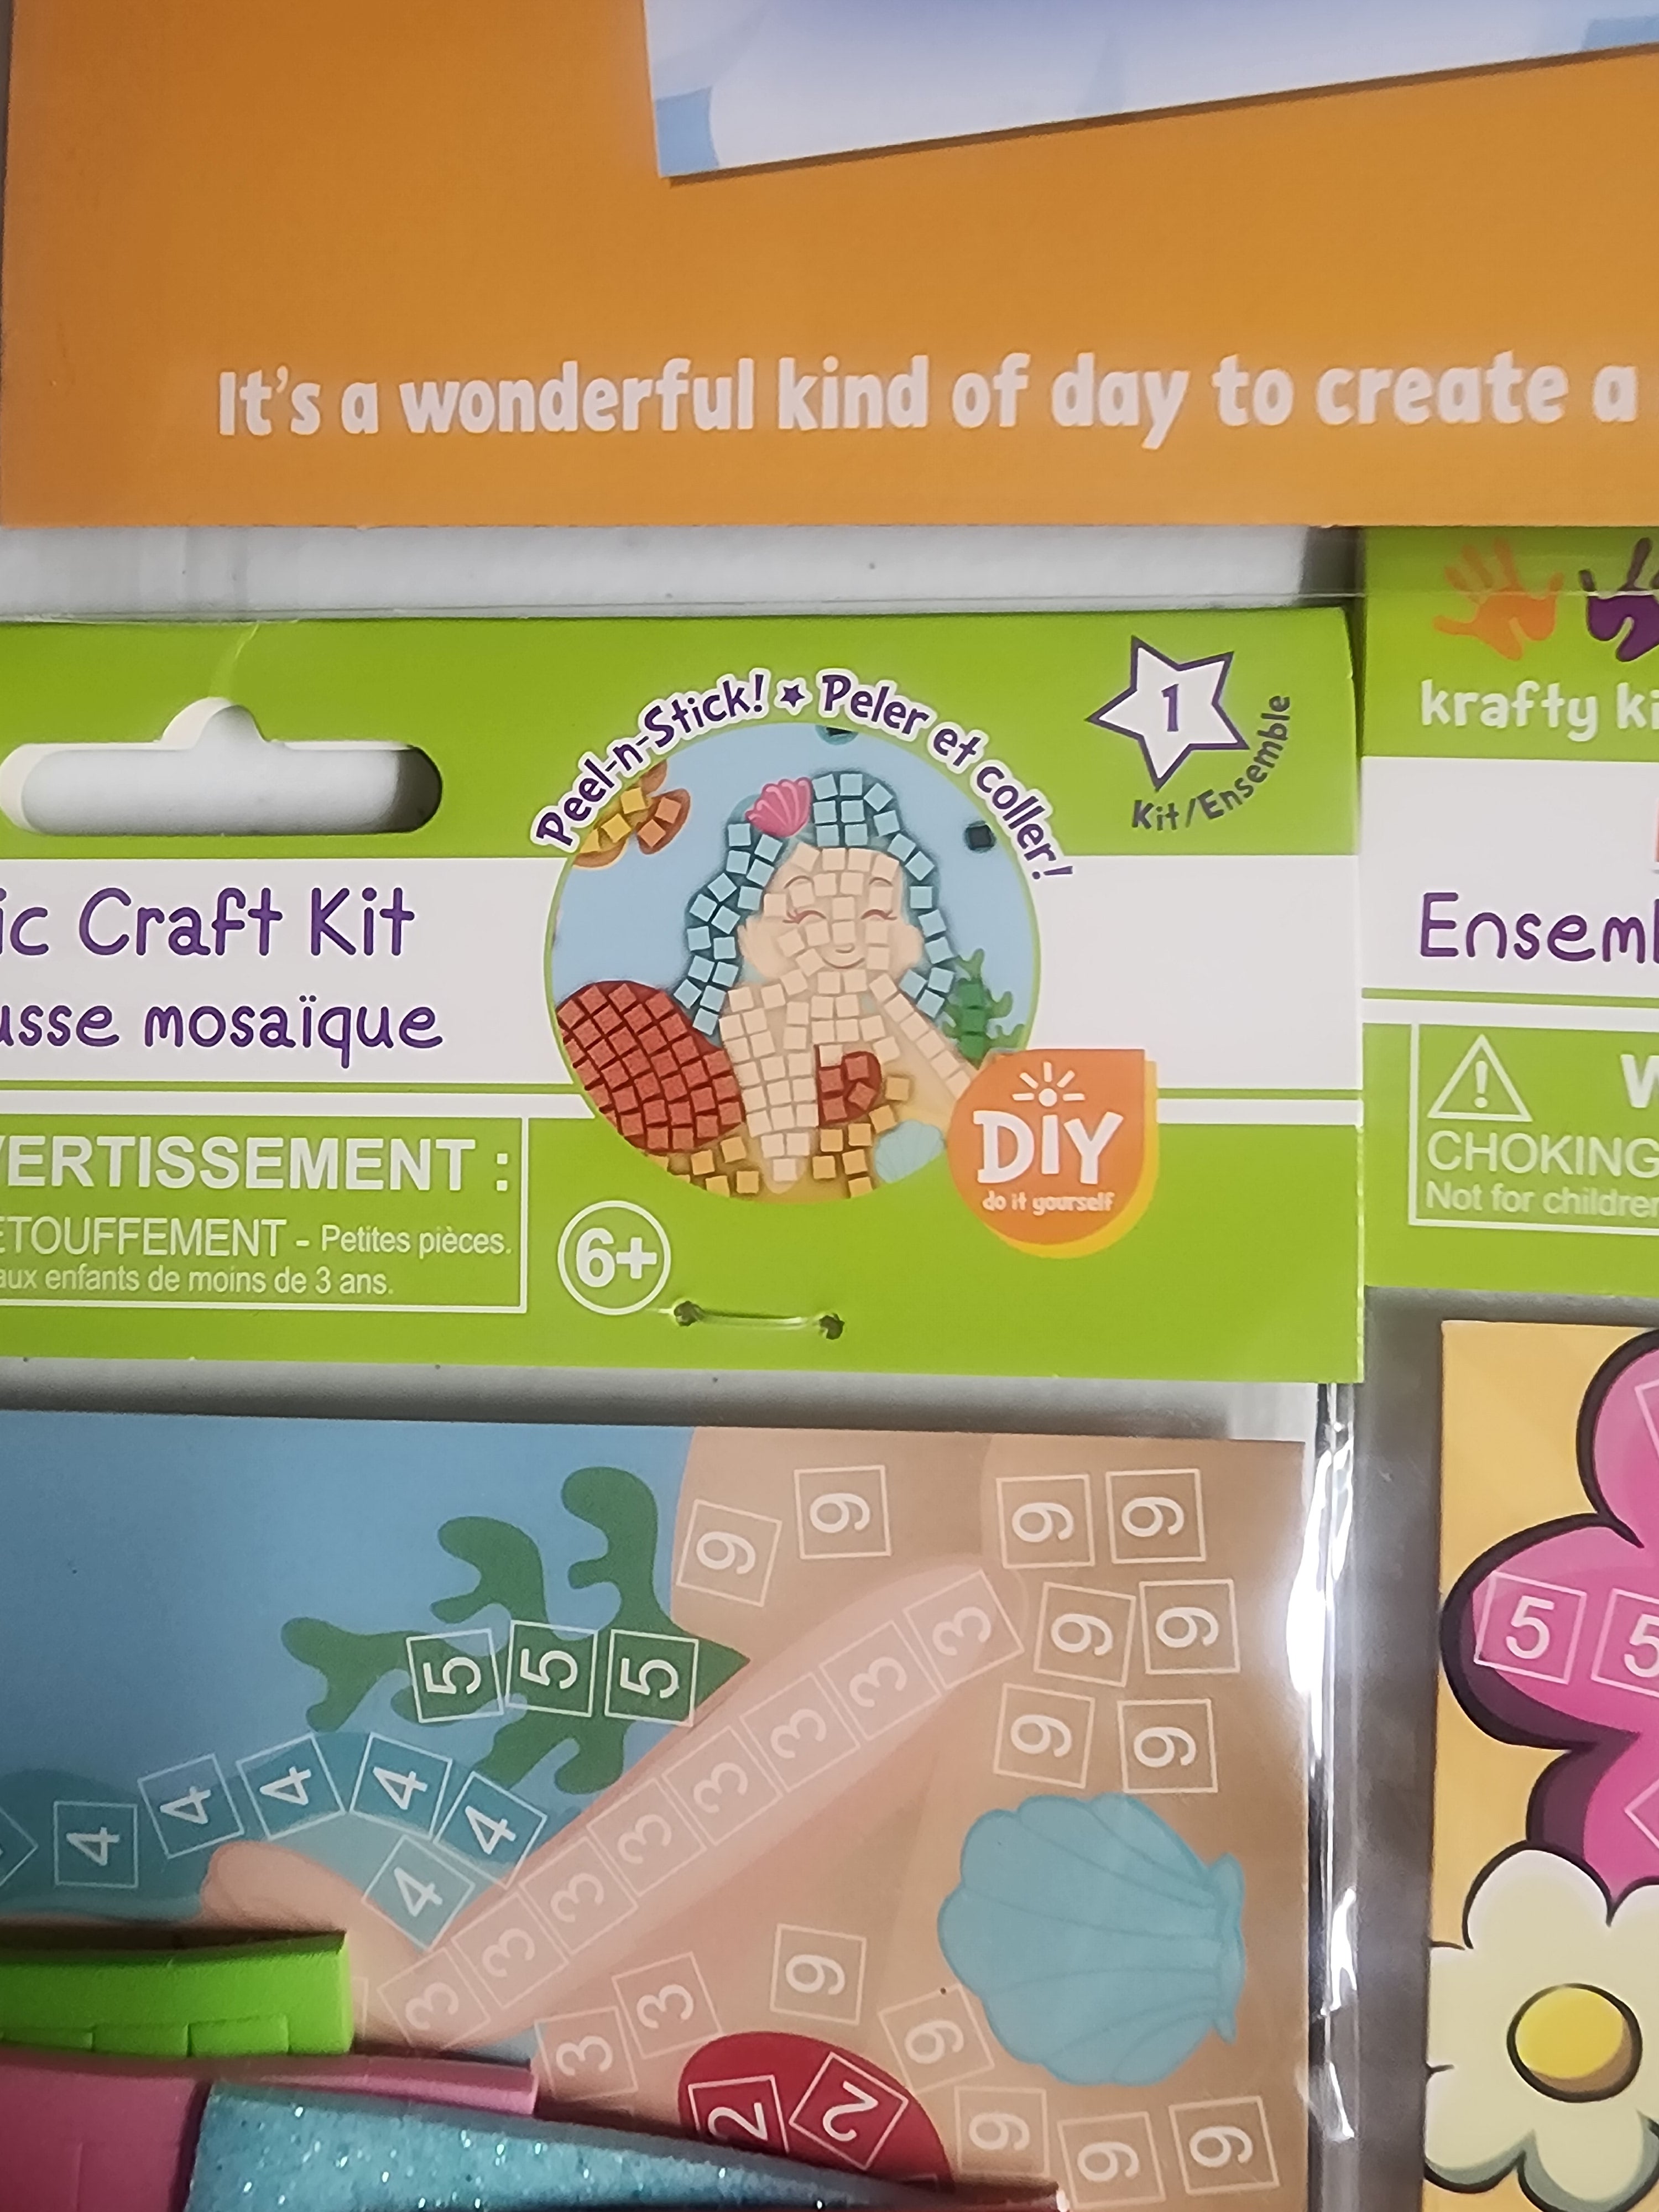 DIY Unicorn Dinosaur Mermaid Bee Kids Mosaic Art Craft Kit Bundle Lot 4